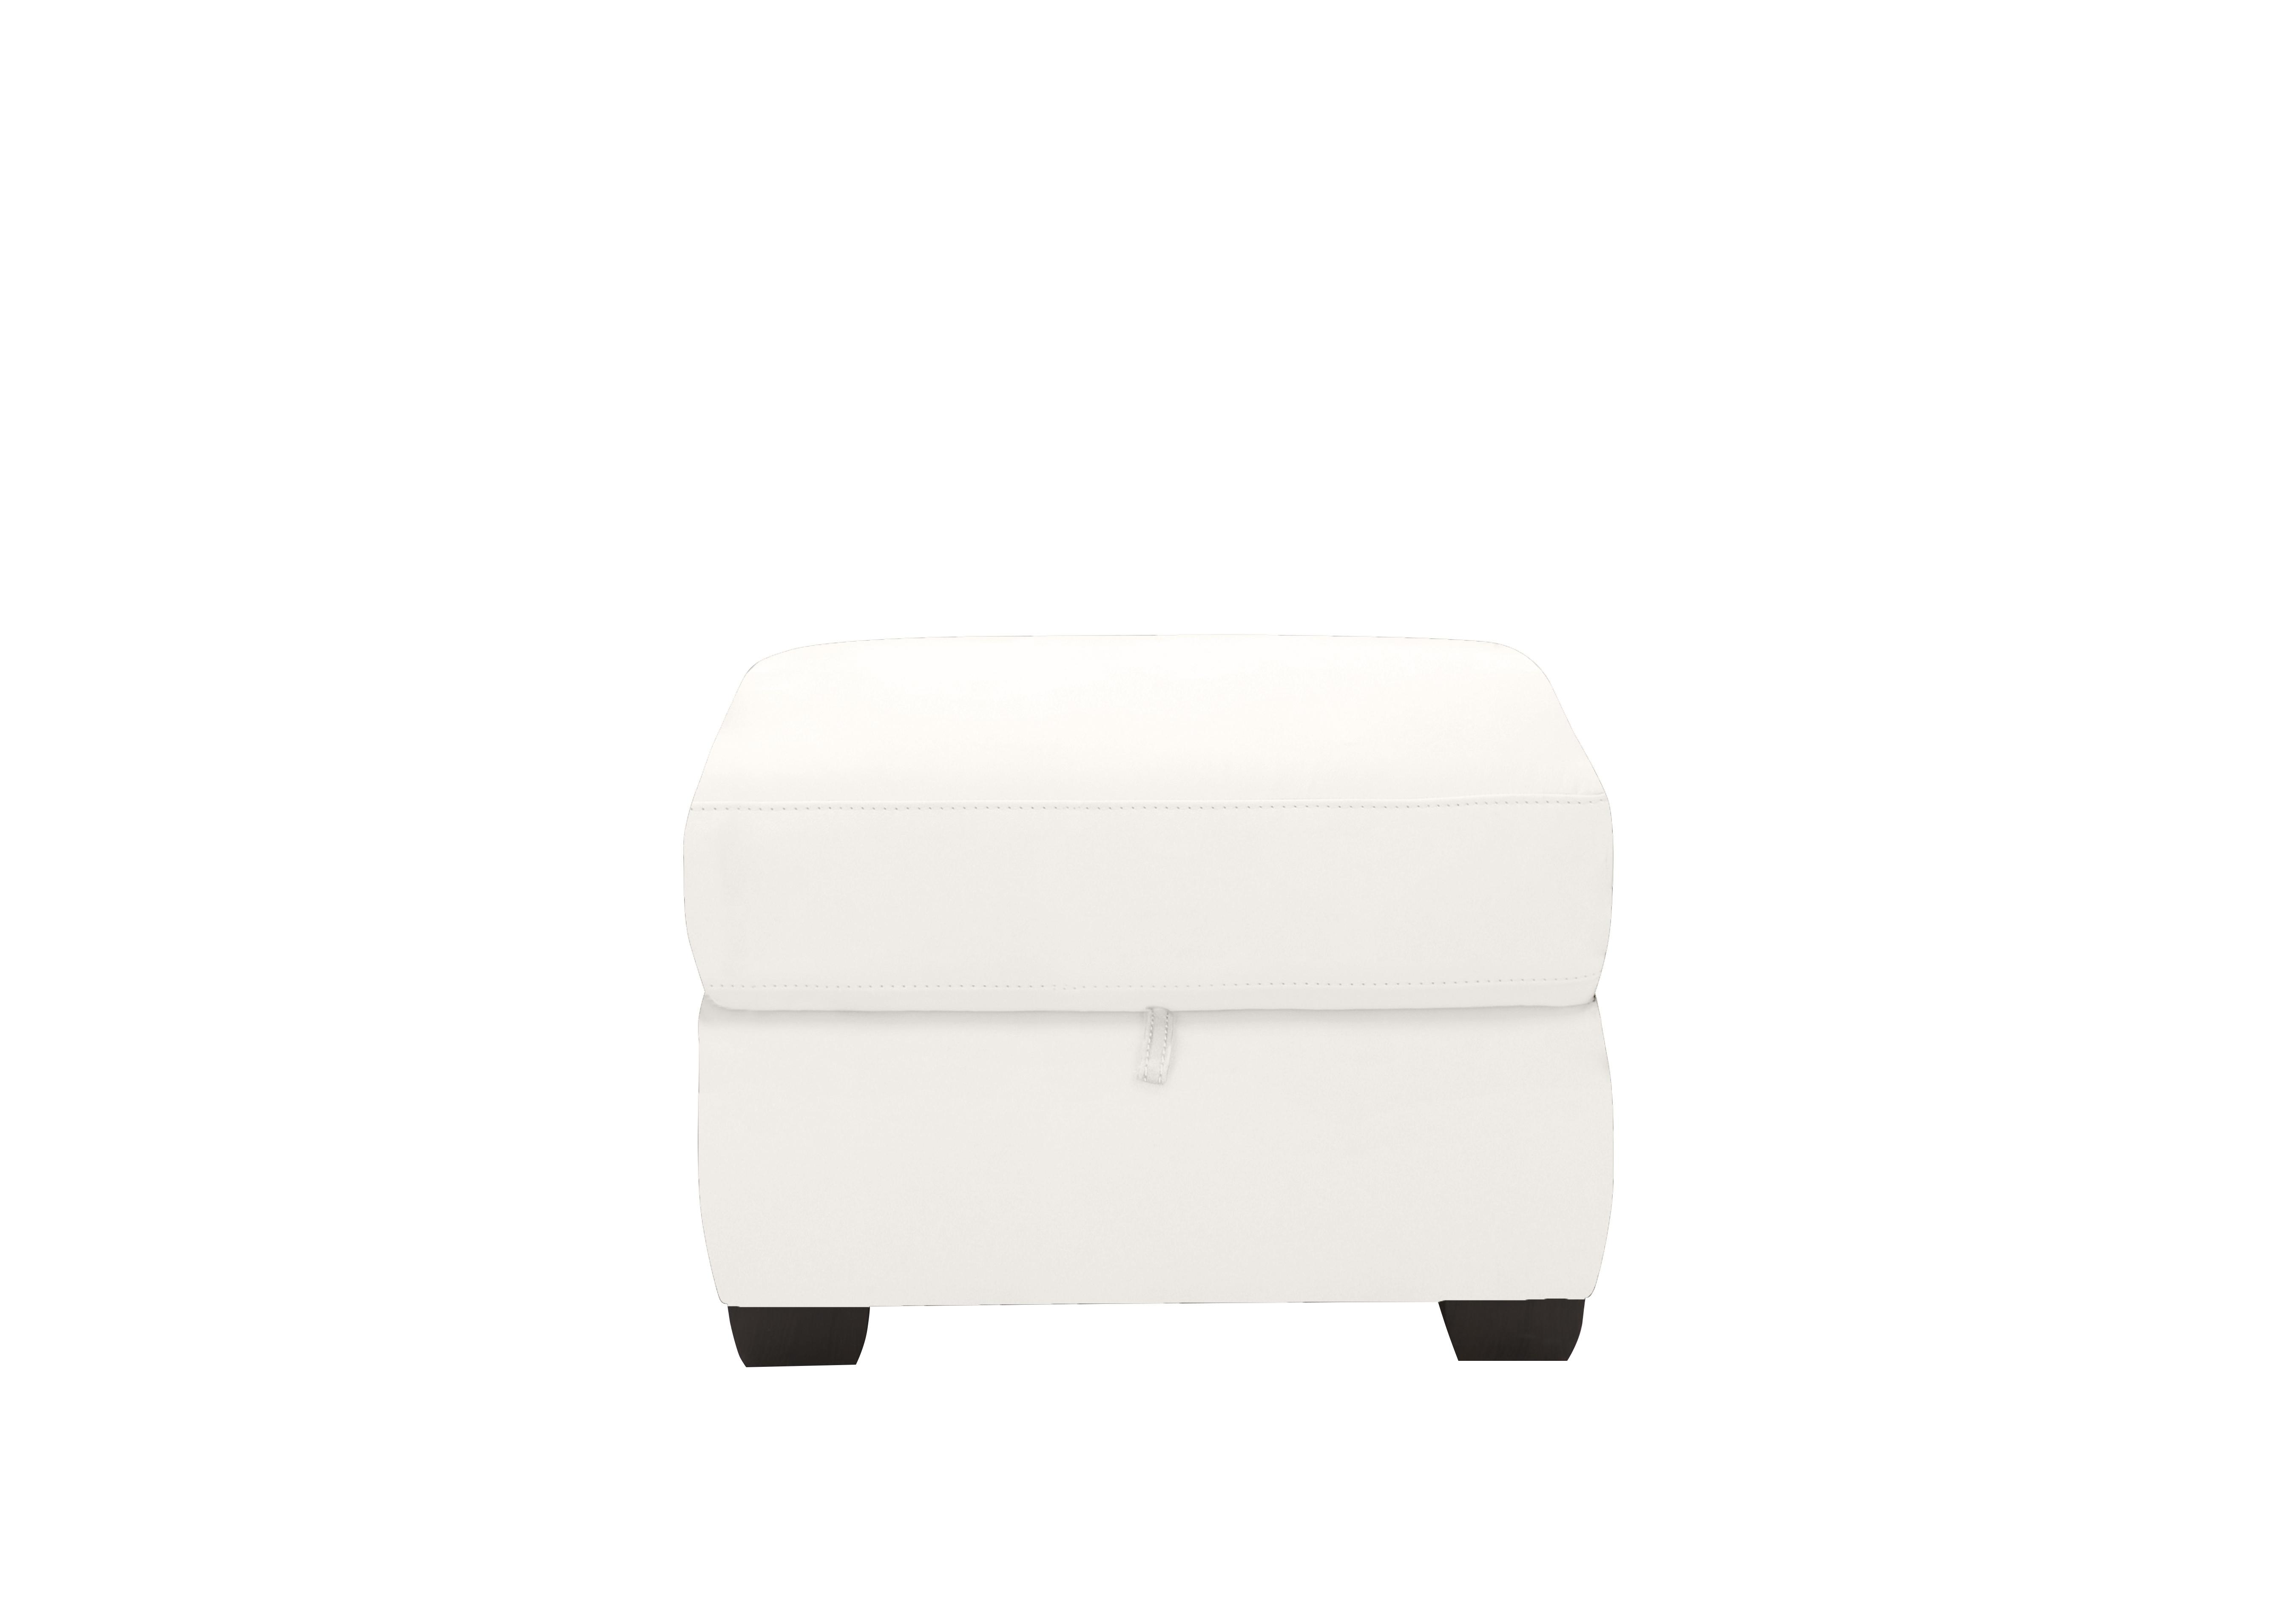 Optimus Leather Storage Footstool in Bv-744d Star White on Furniture Village